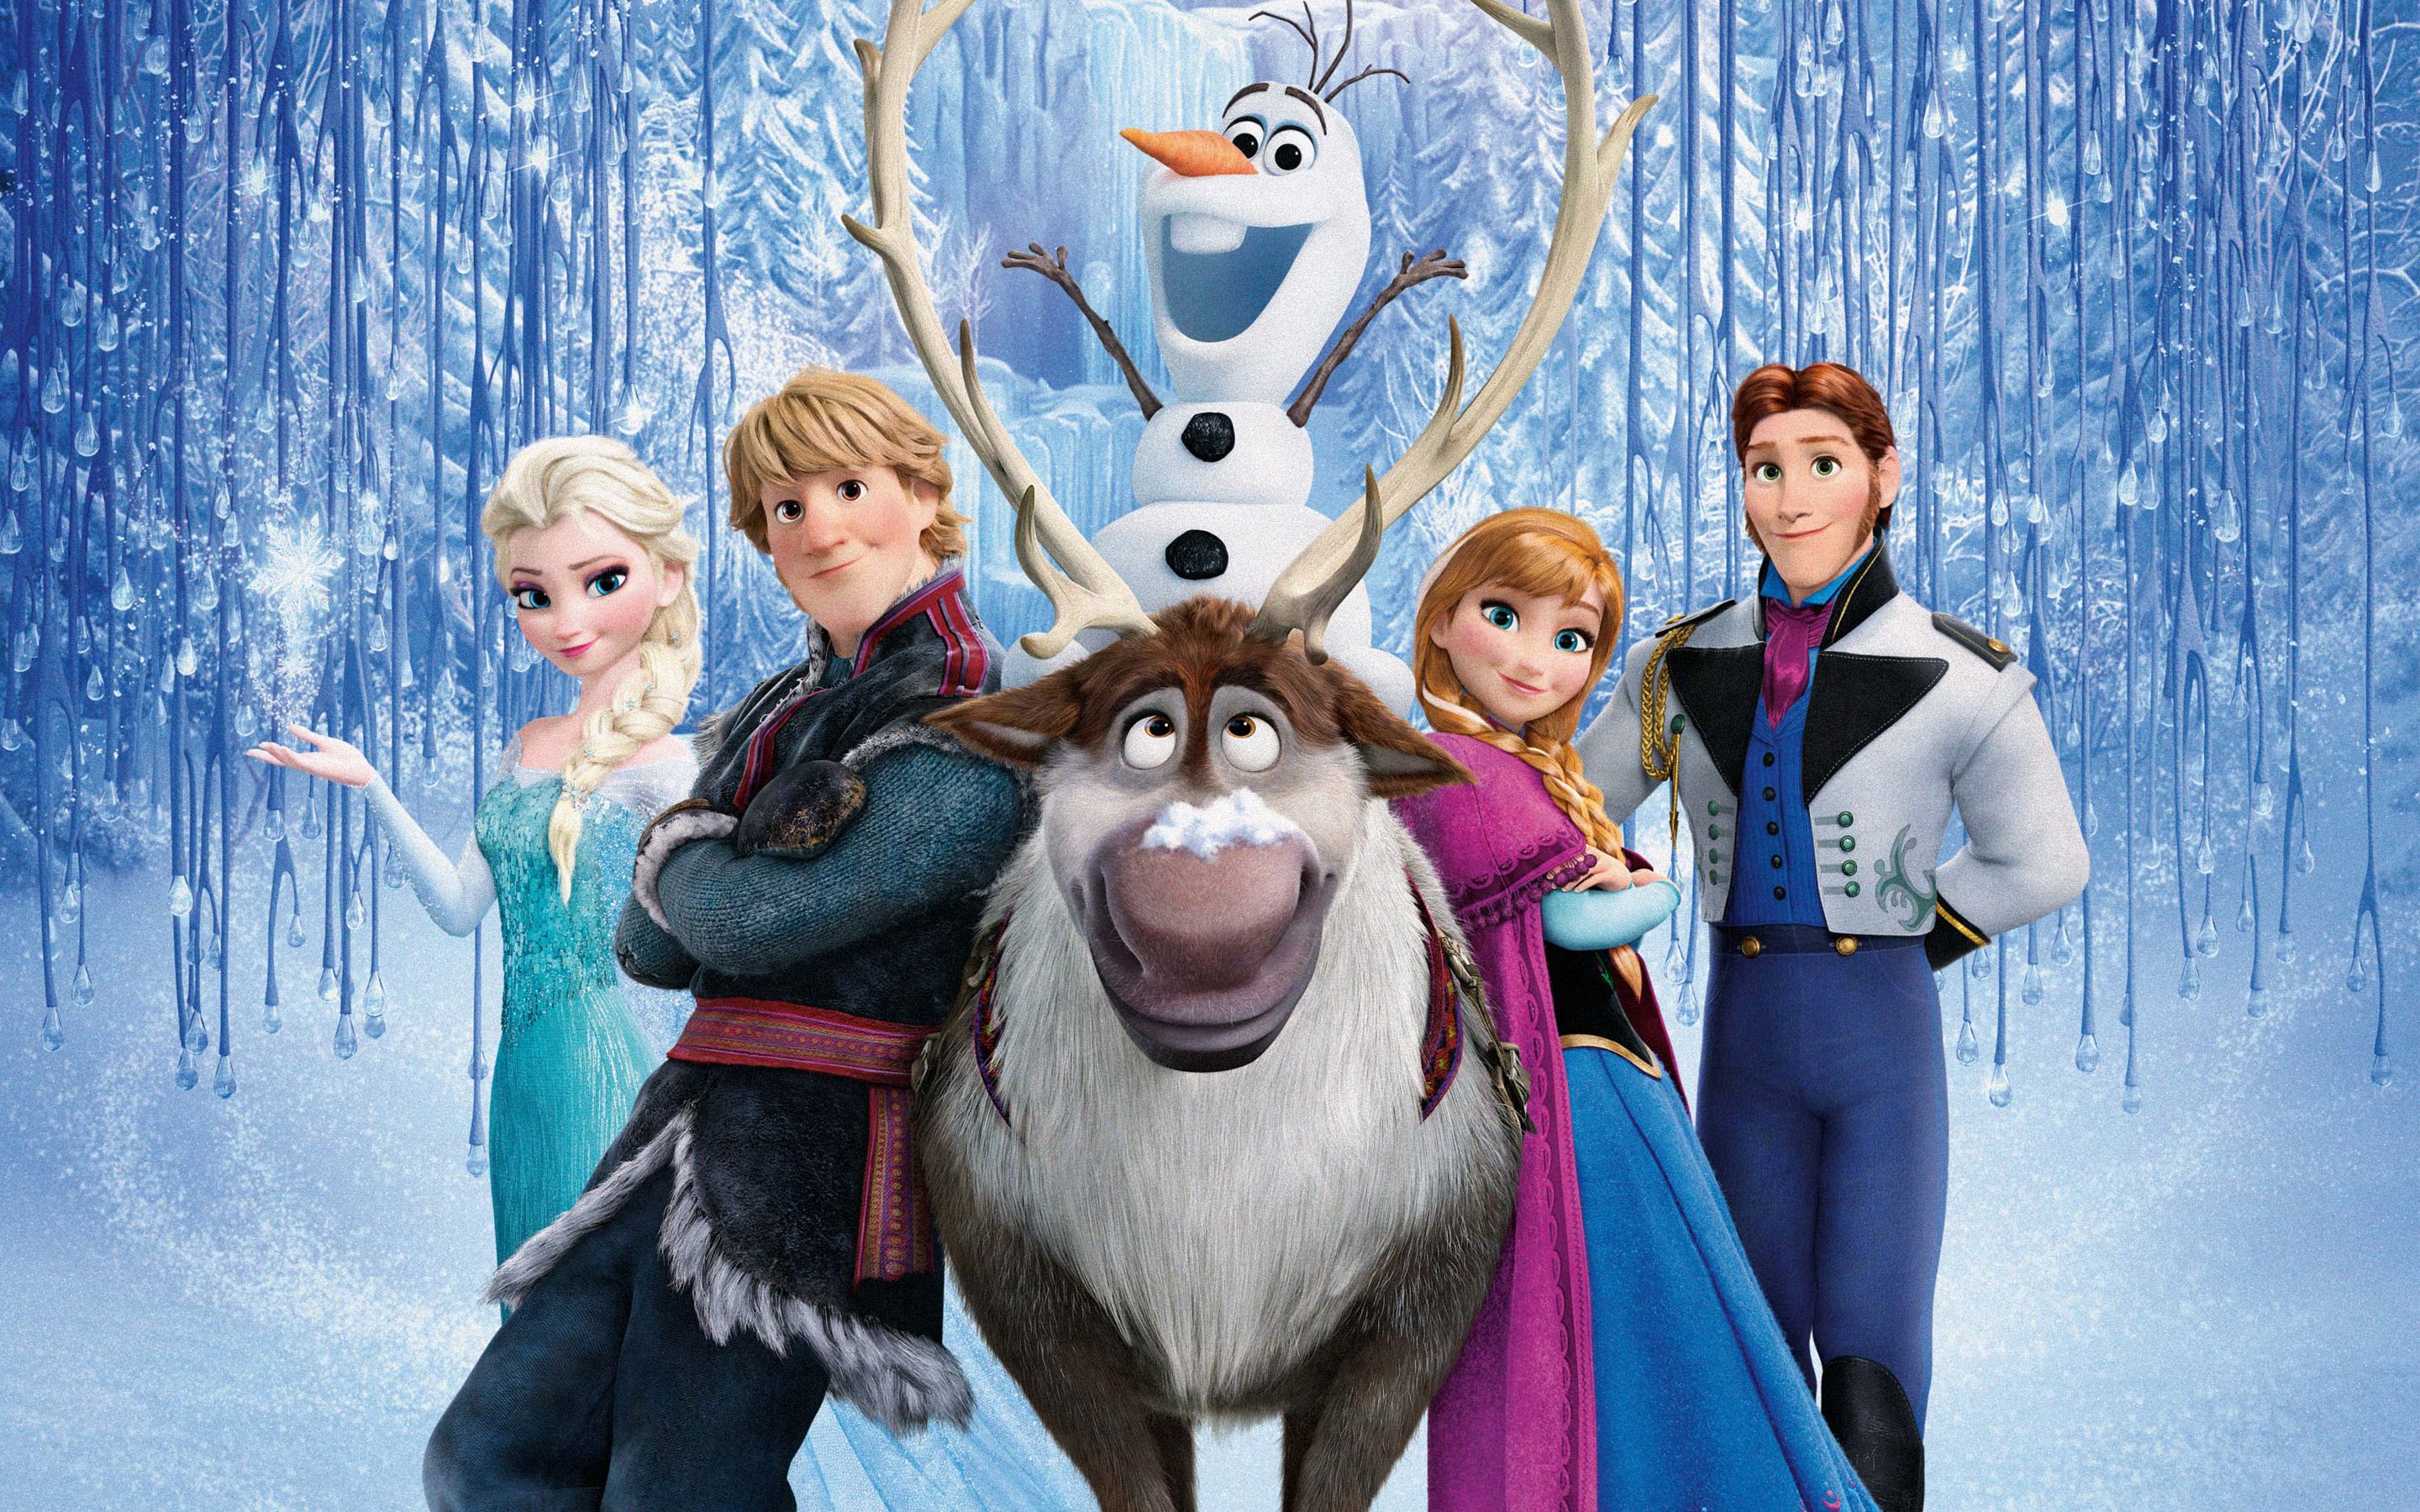 Disney Frozen Movie HD Wallpaper Image for iPad Air 2